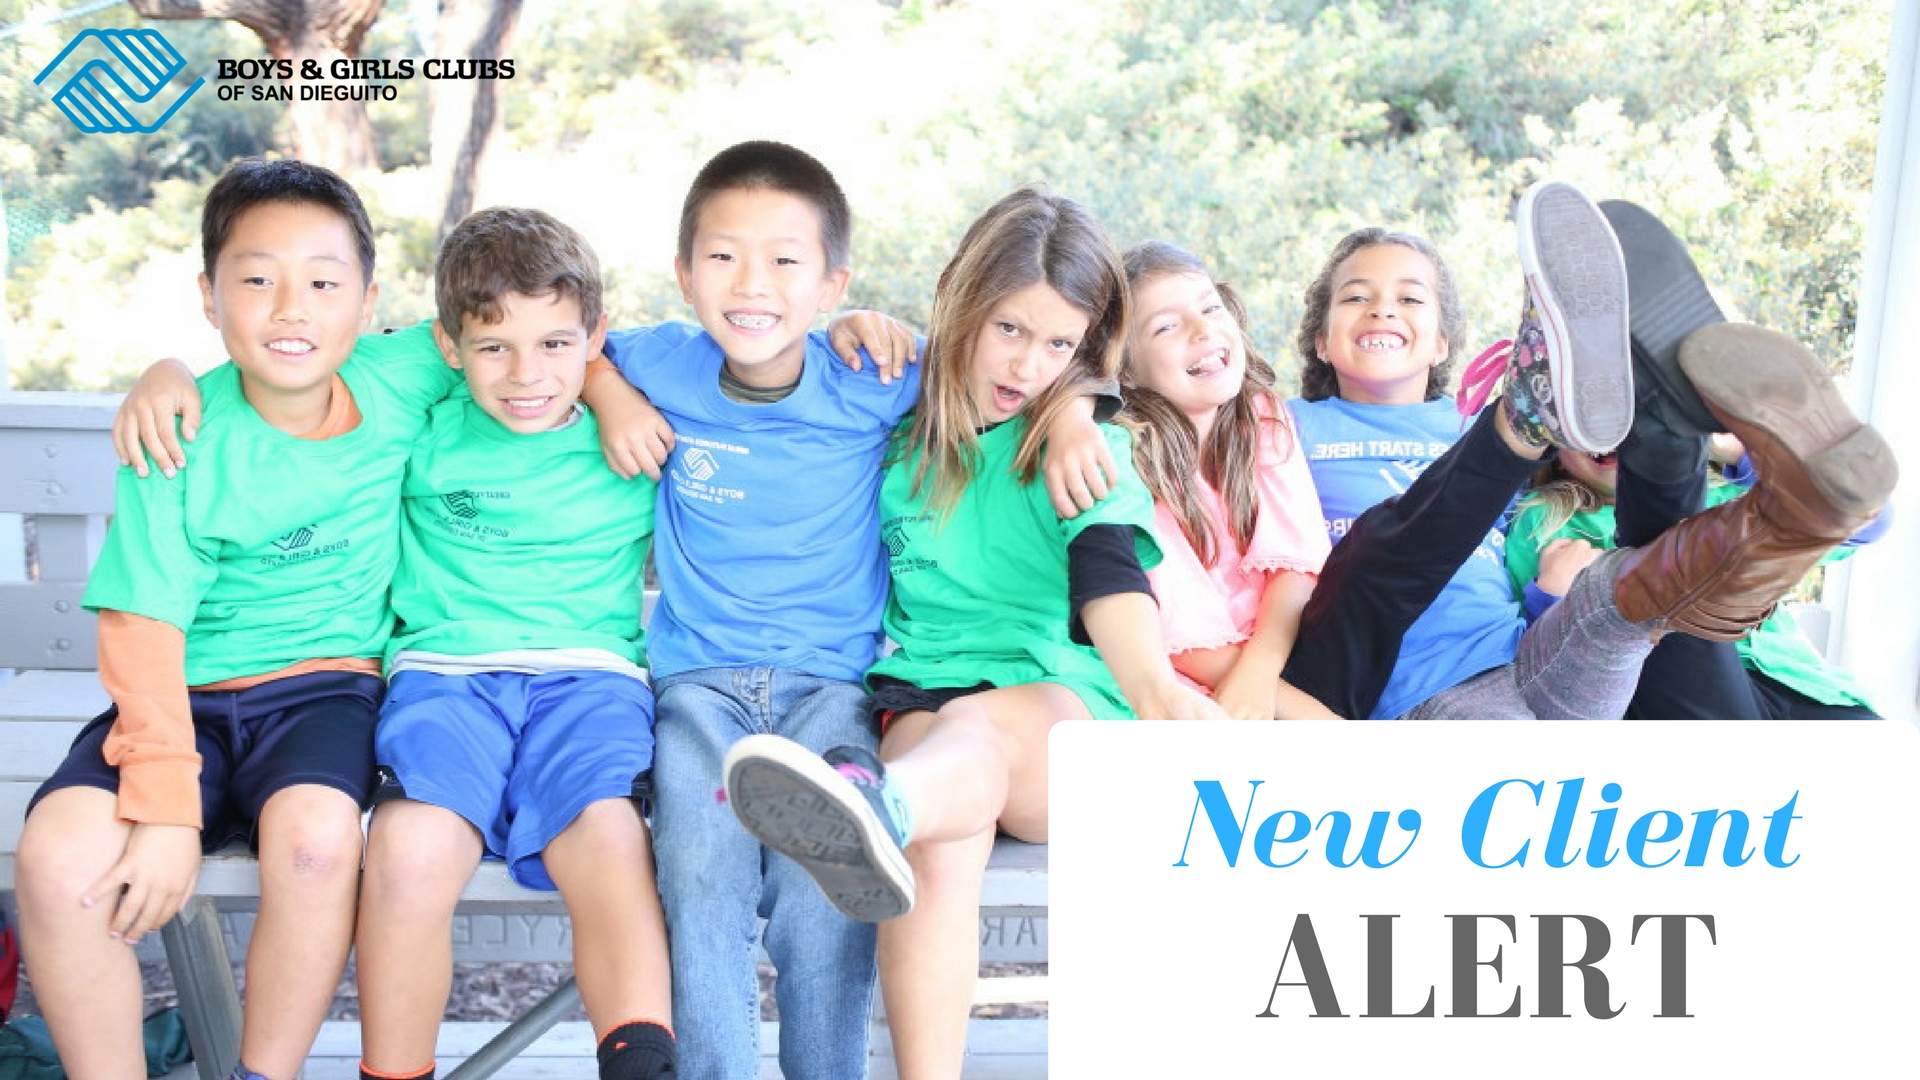 New Client Alert: LLPR Welcomes Nonprofit Boys & Girls Clubs of San Dieguito